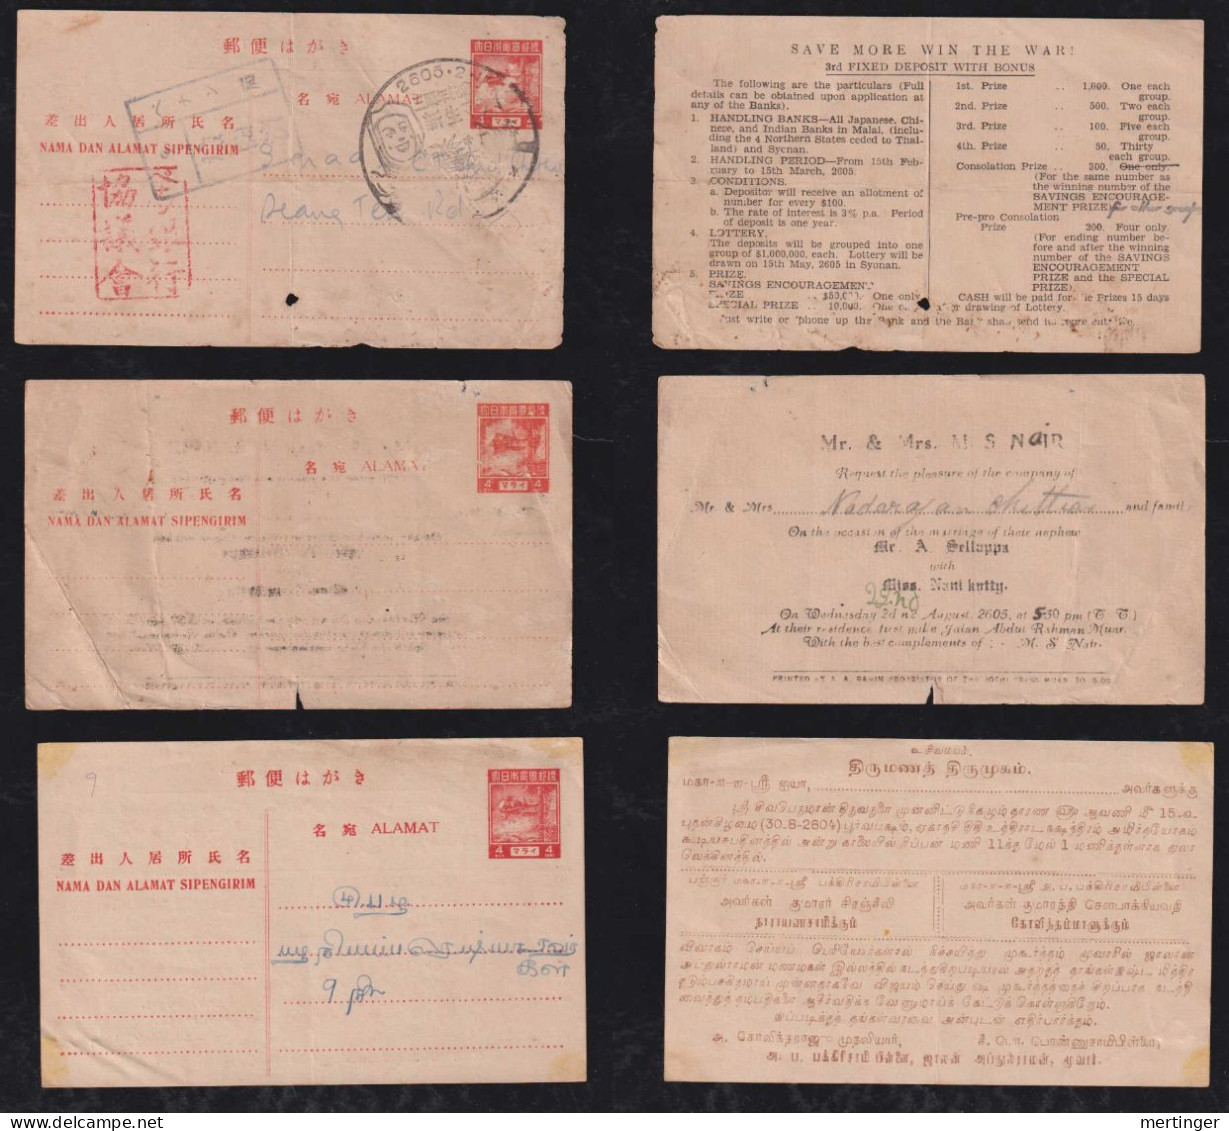 Japan Occupation Malaysia 1944-45 3 Stationery Postcard Private Imprint - Ocupacion Japonesa